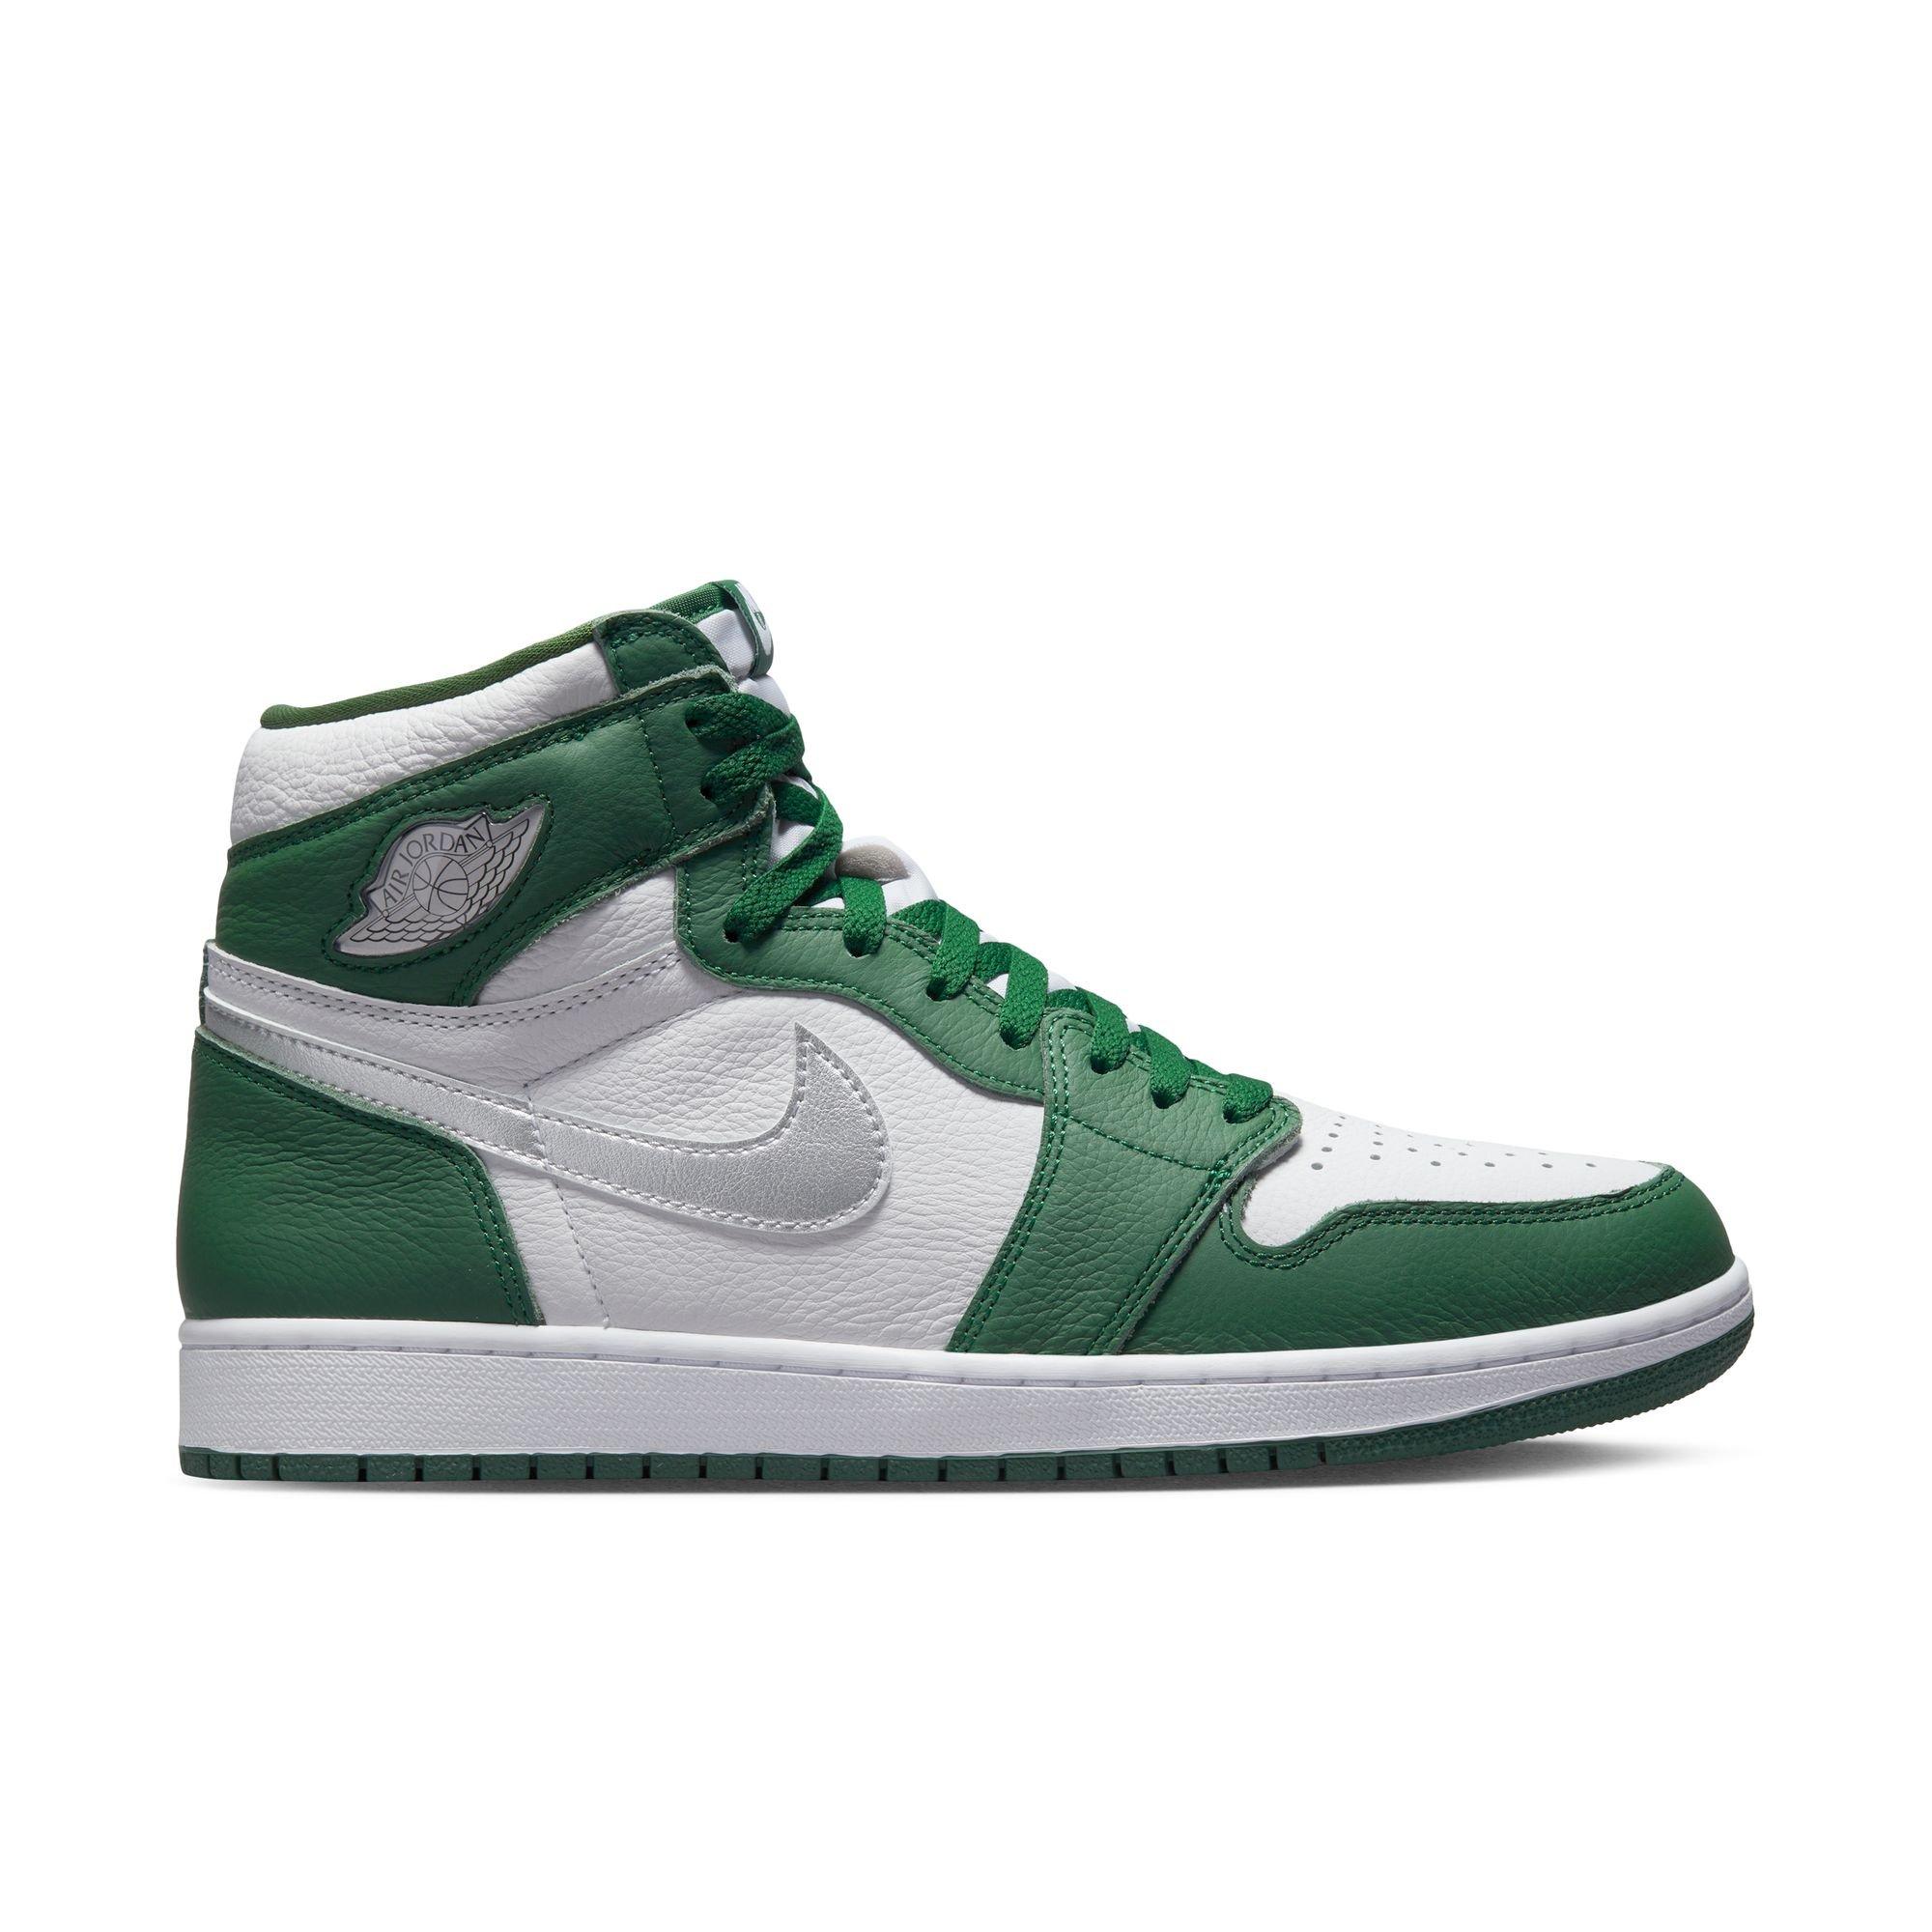 Jordan 1 Retro High OG "Gorge Green/Metallic Shoe